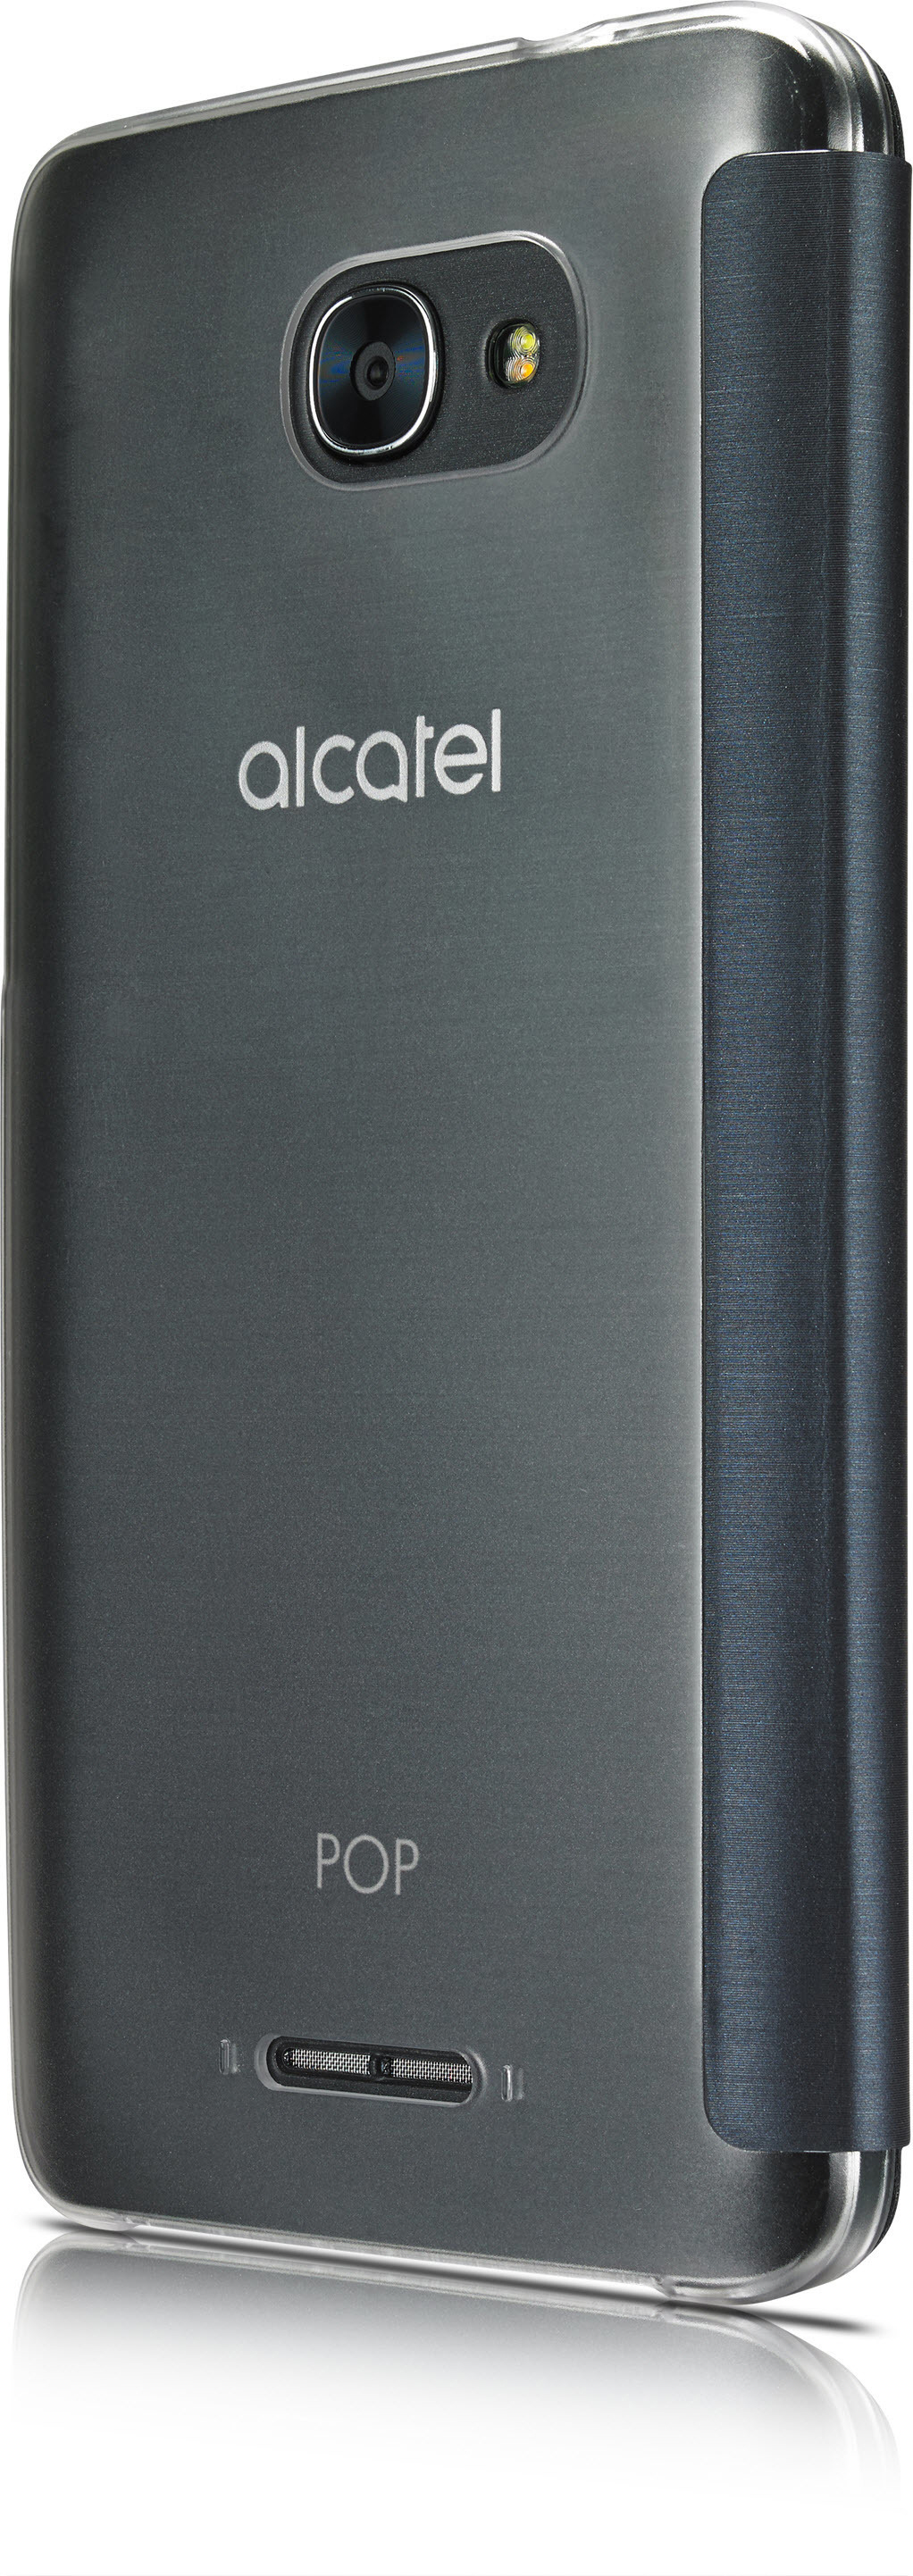 ALCATEL AF5095, Bookcover, Alcatel, 5095, POP Grau/Silber 4S